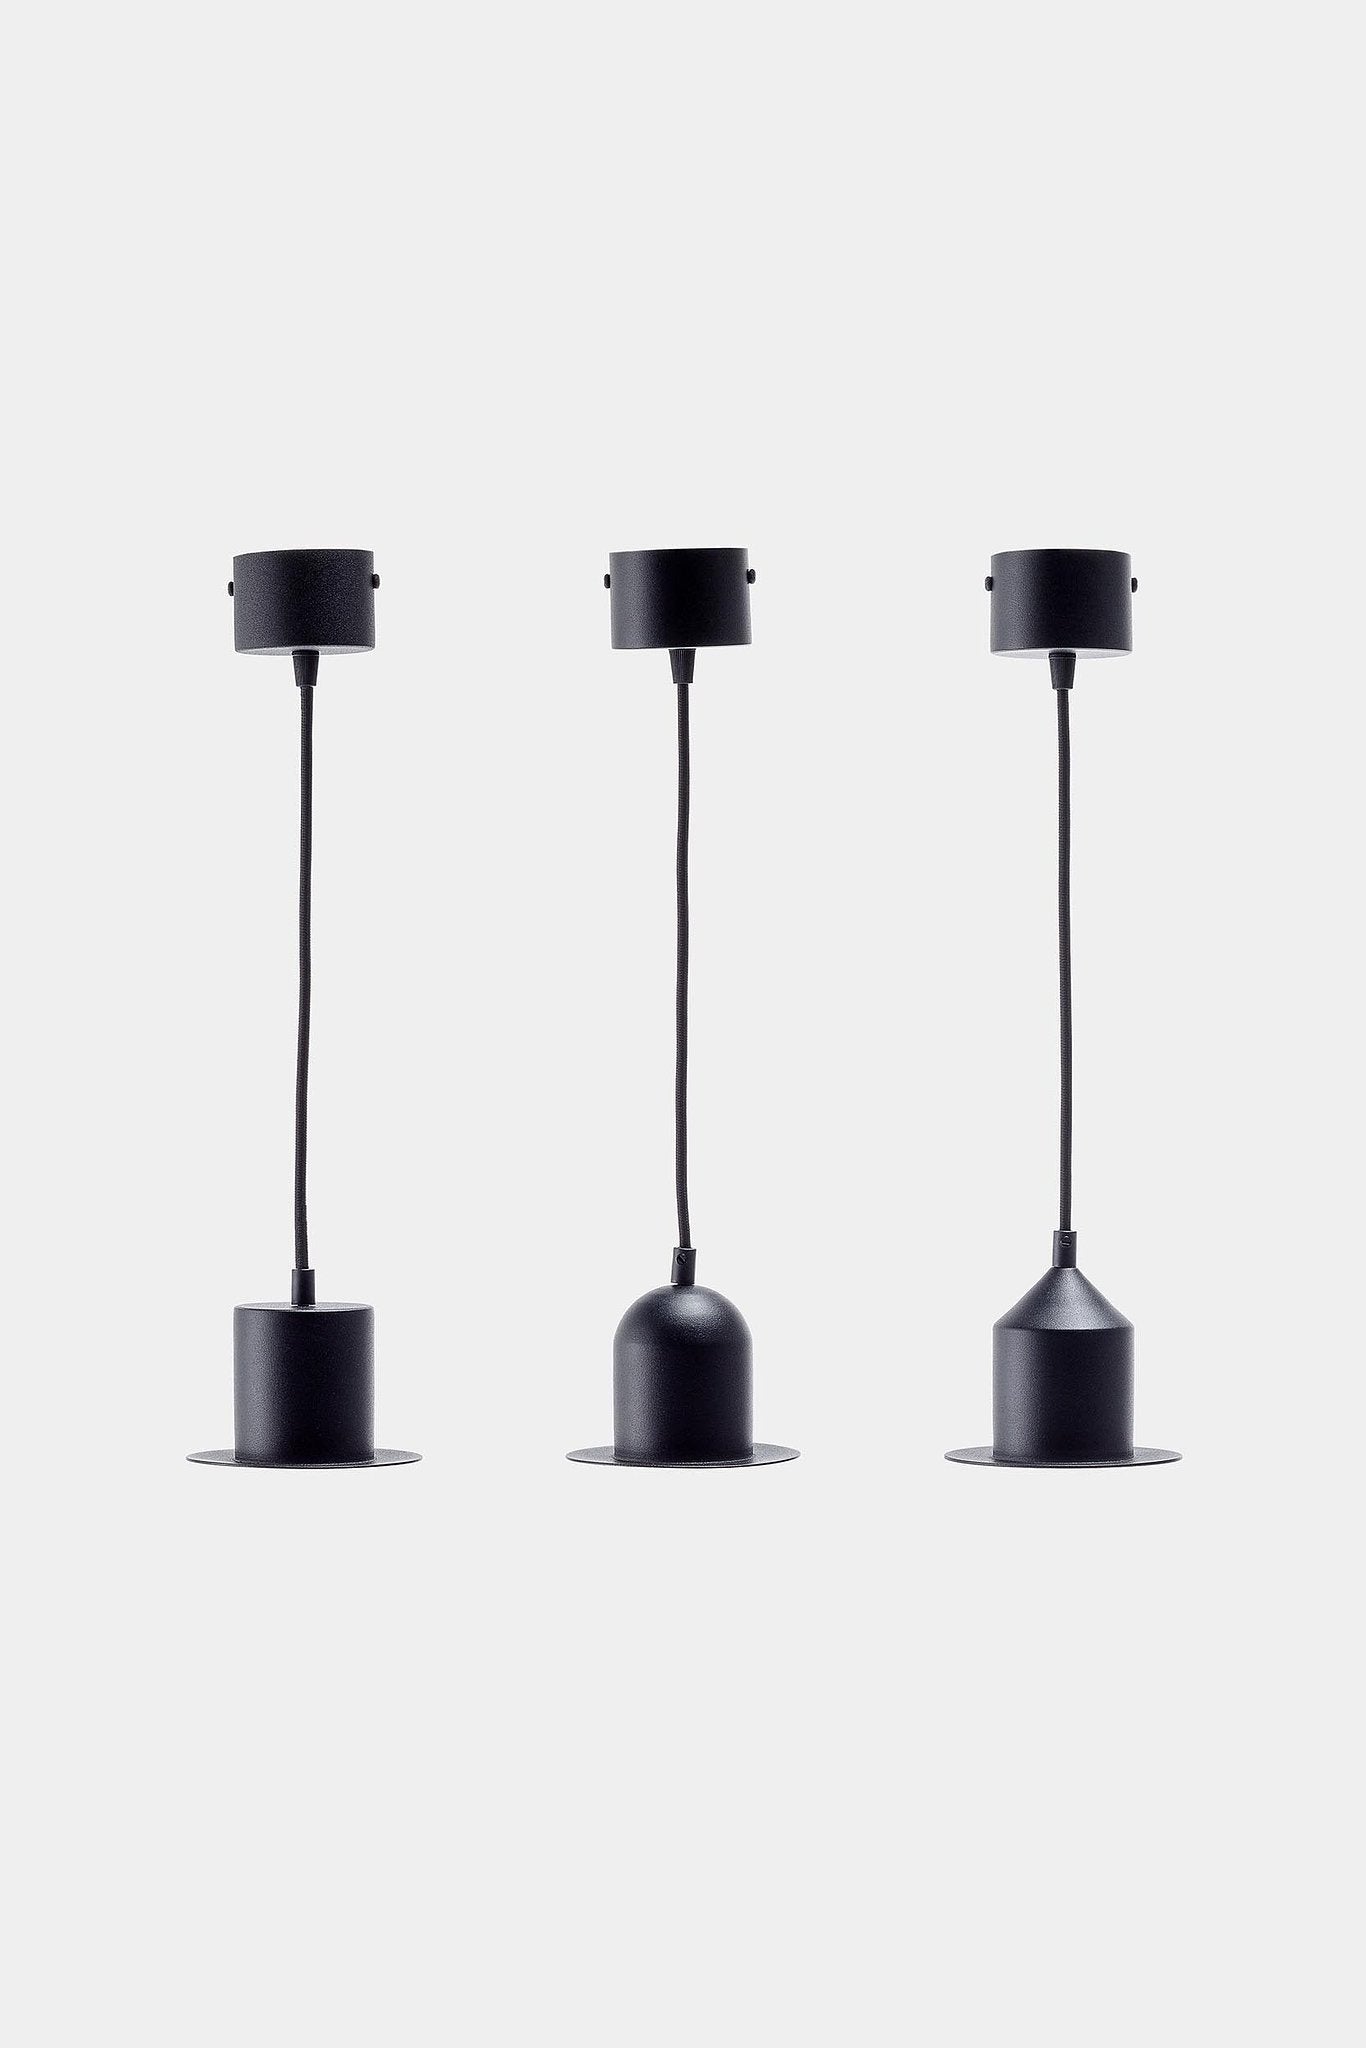 EMKO HAT Pendant Lamp Set of 3 Pendant Lamps